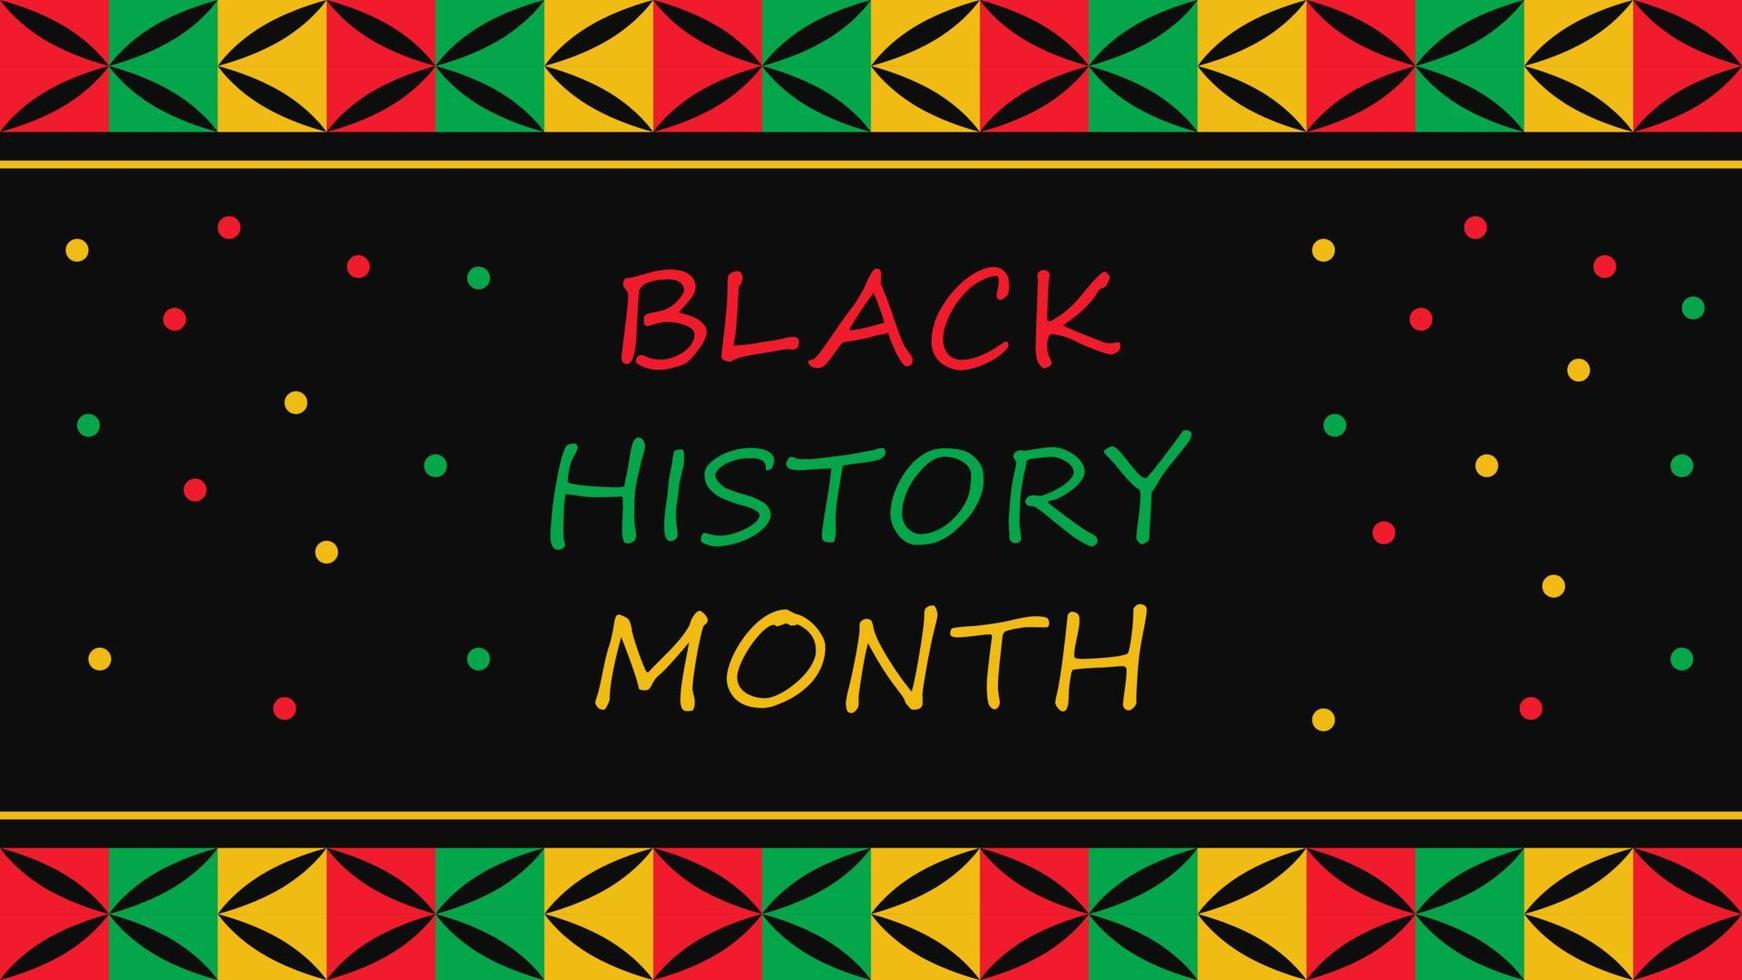 Black history month. African American history celebration. Vector illustration. EPS 10.